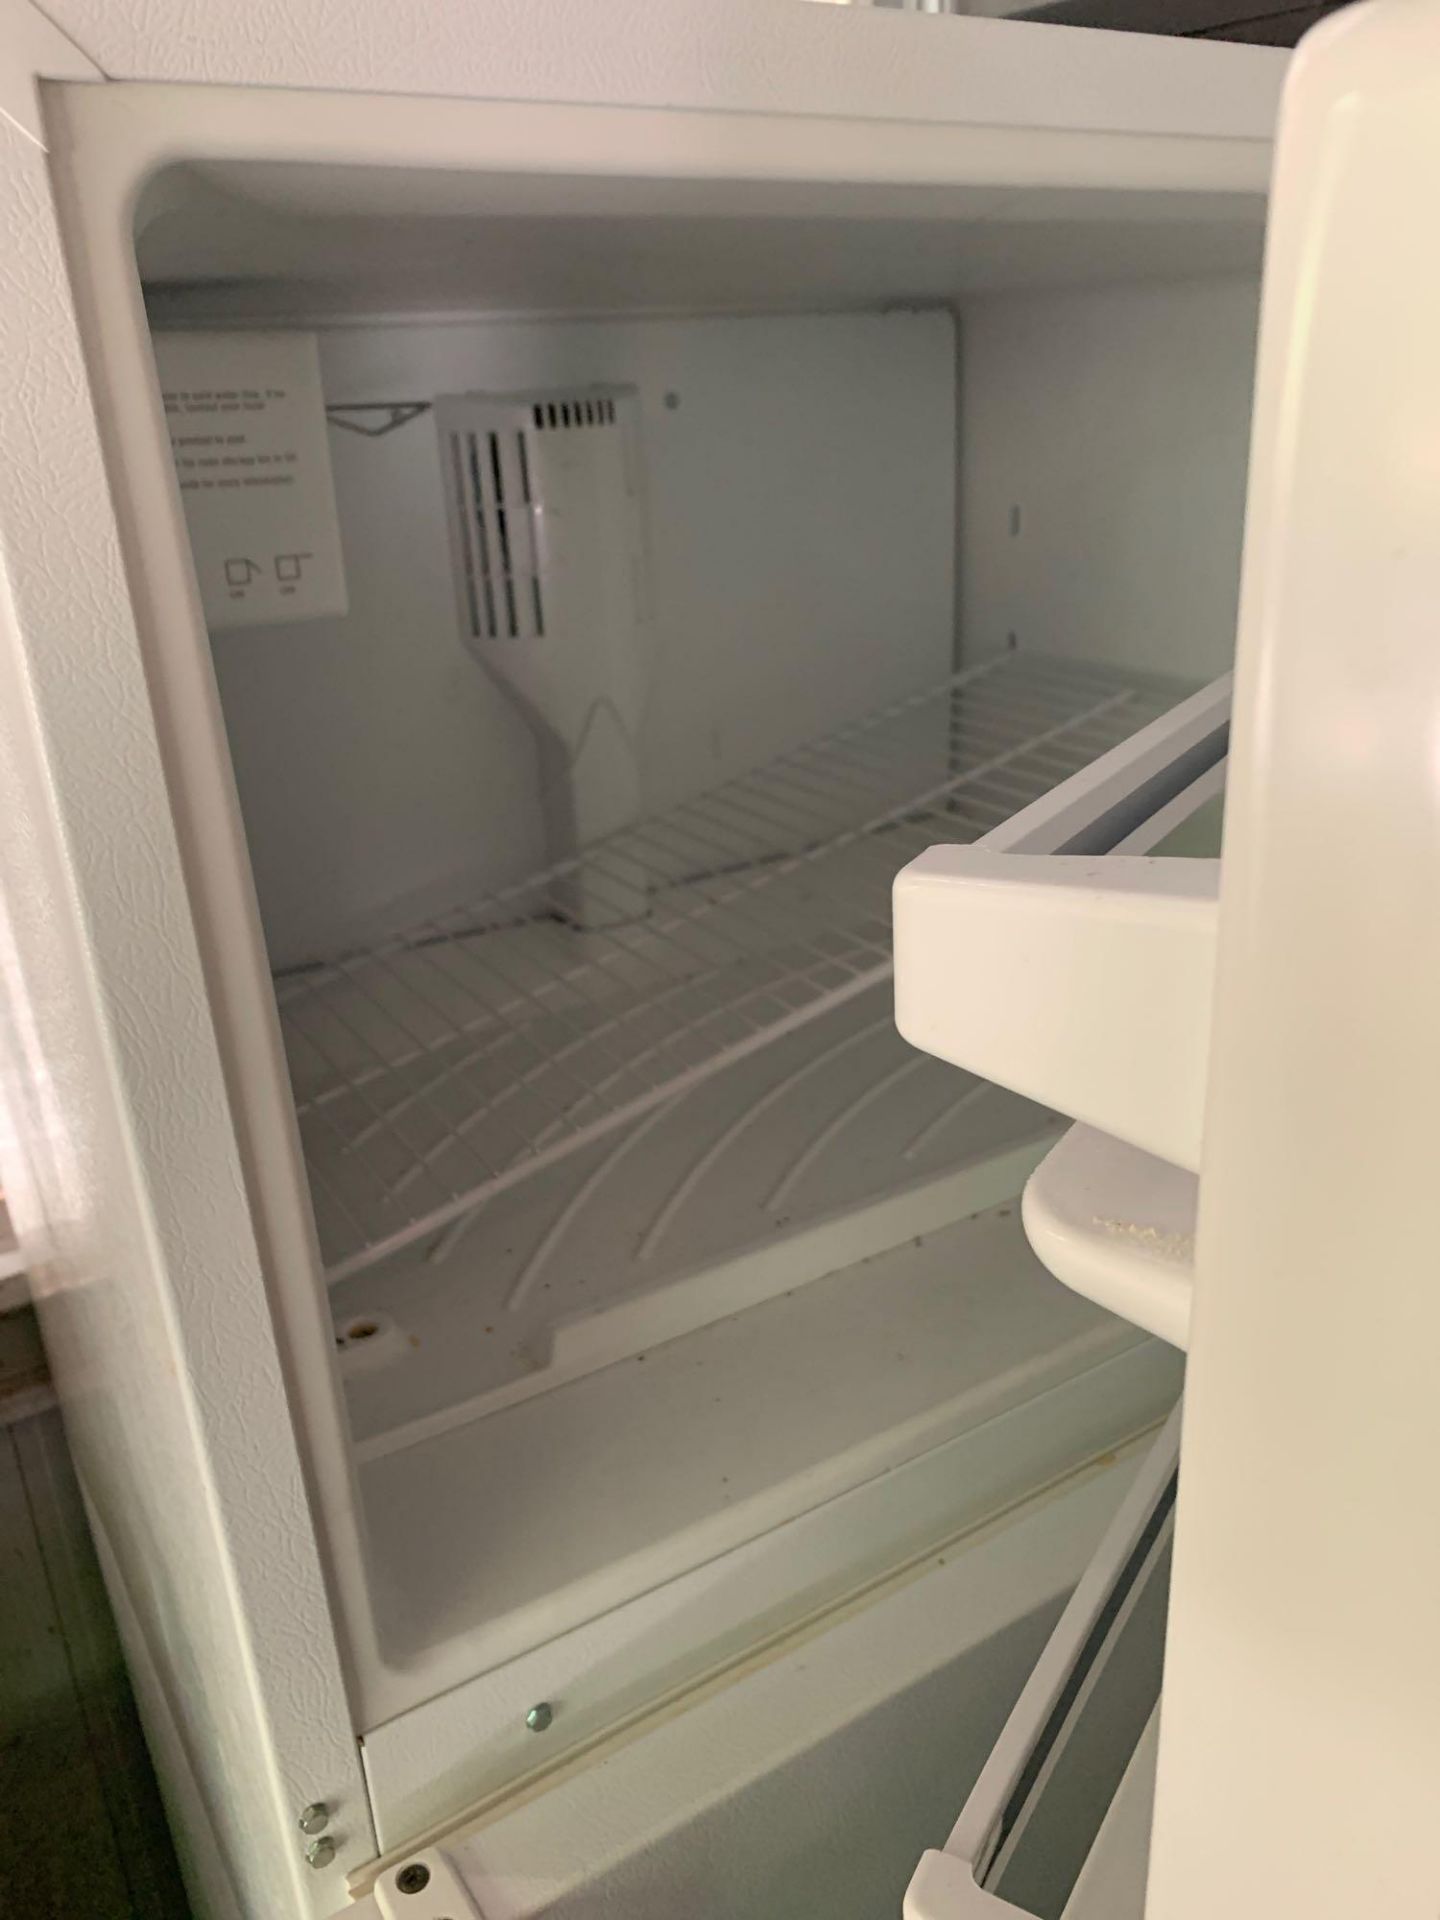 Roper Residential Refrigerator - Image 2 of 3